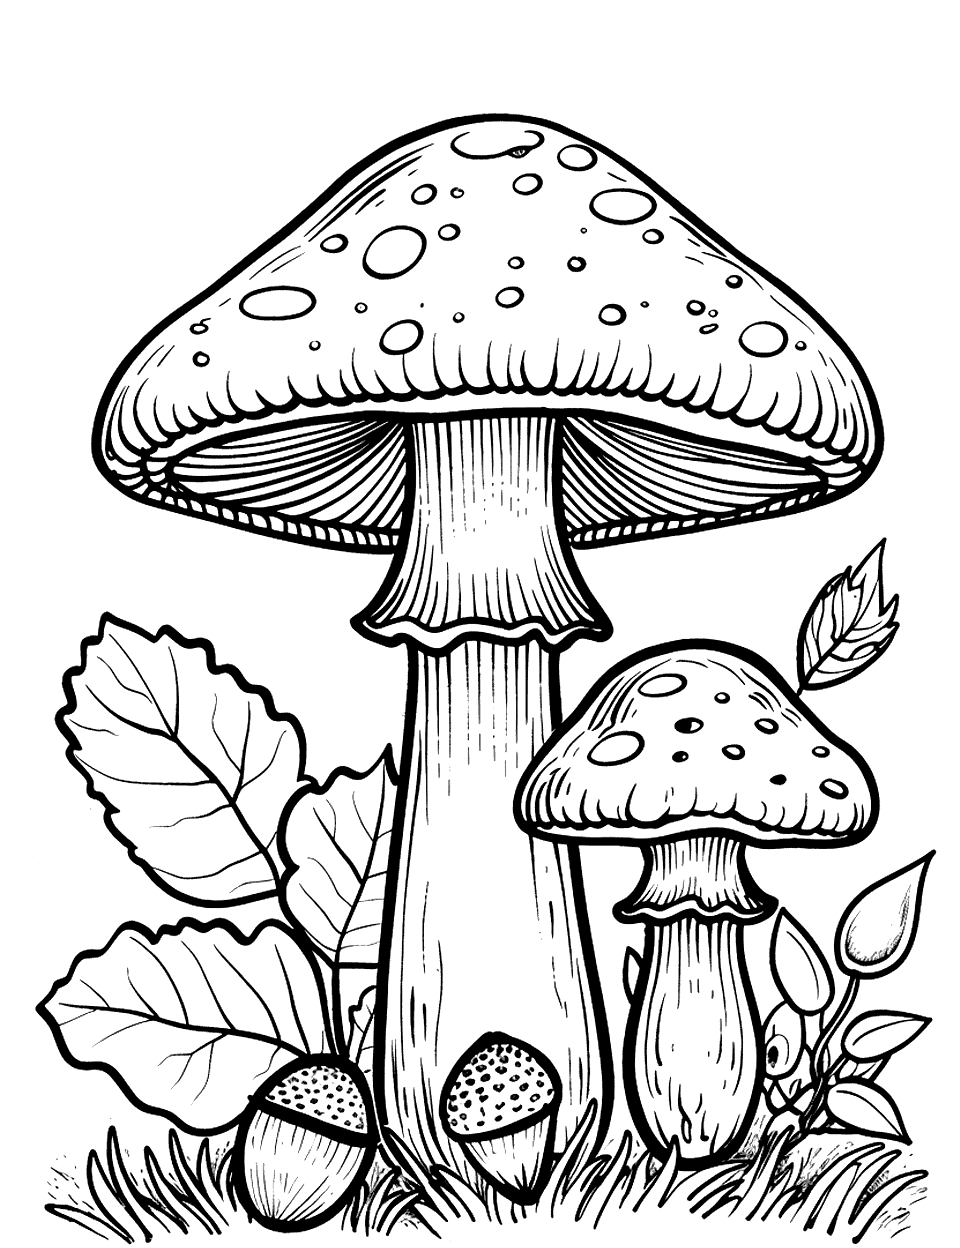 Autumn Mushrooms and Acorns Mushroom Coloring Page - Mushrooms mixed with acorns and autumn leaves on the forest floor.